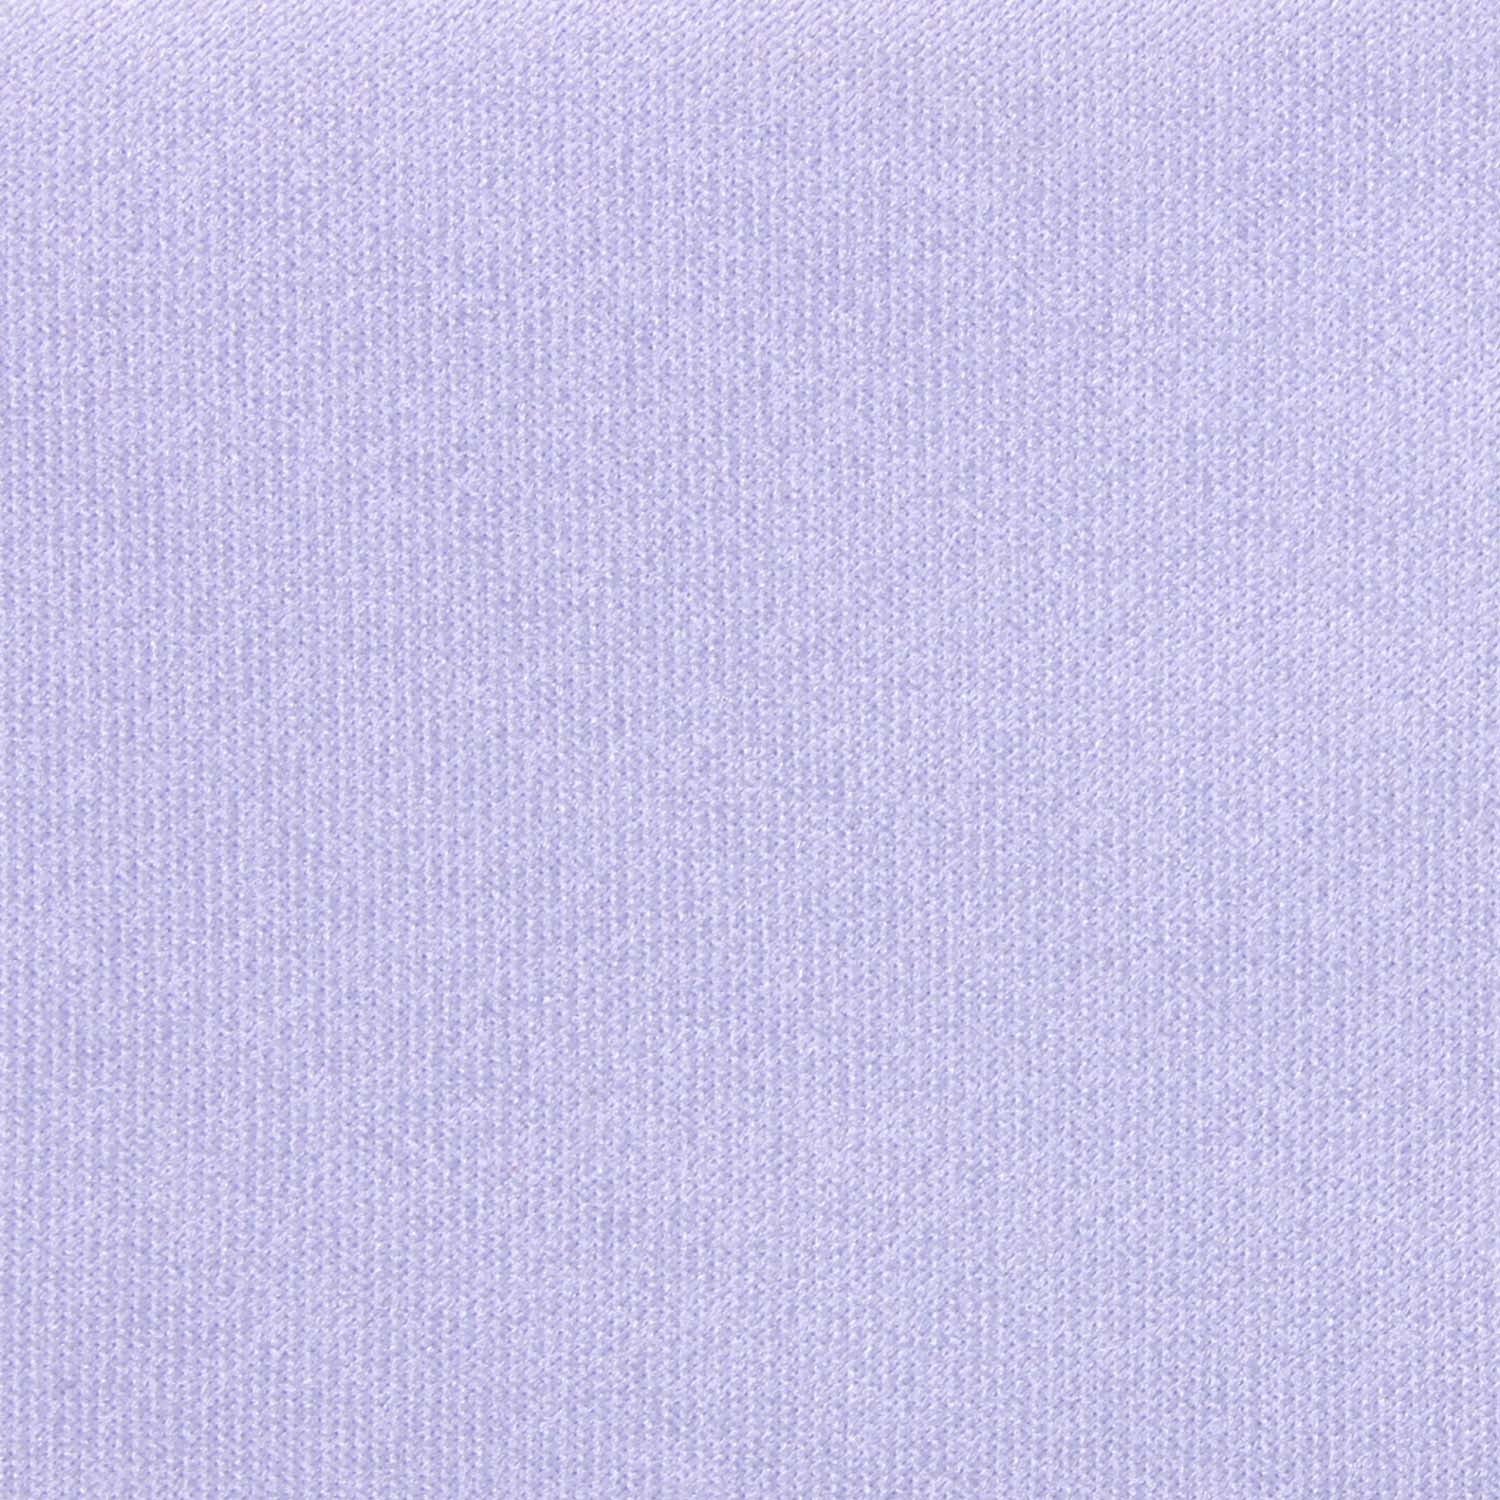 Lavender Purple Satin Fabric Bow Tie M147